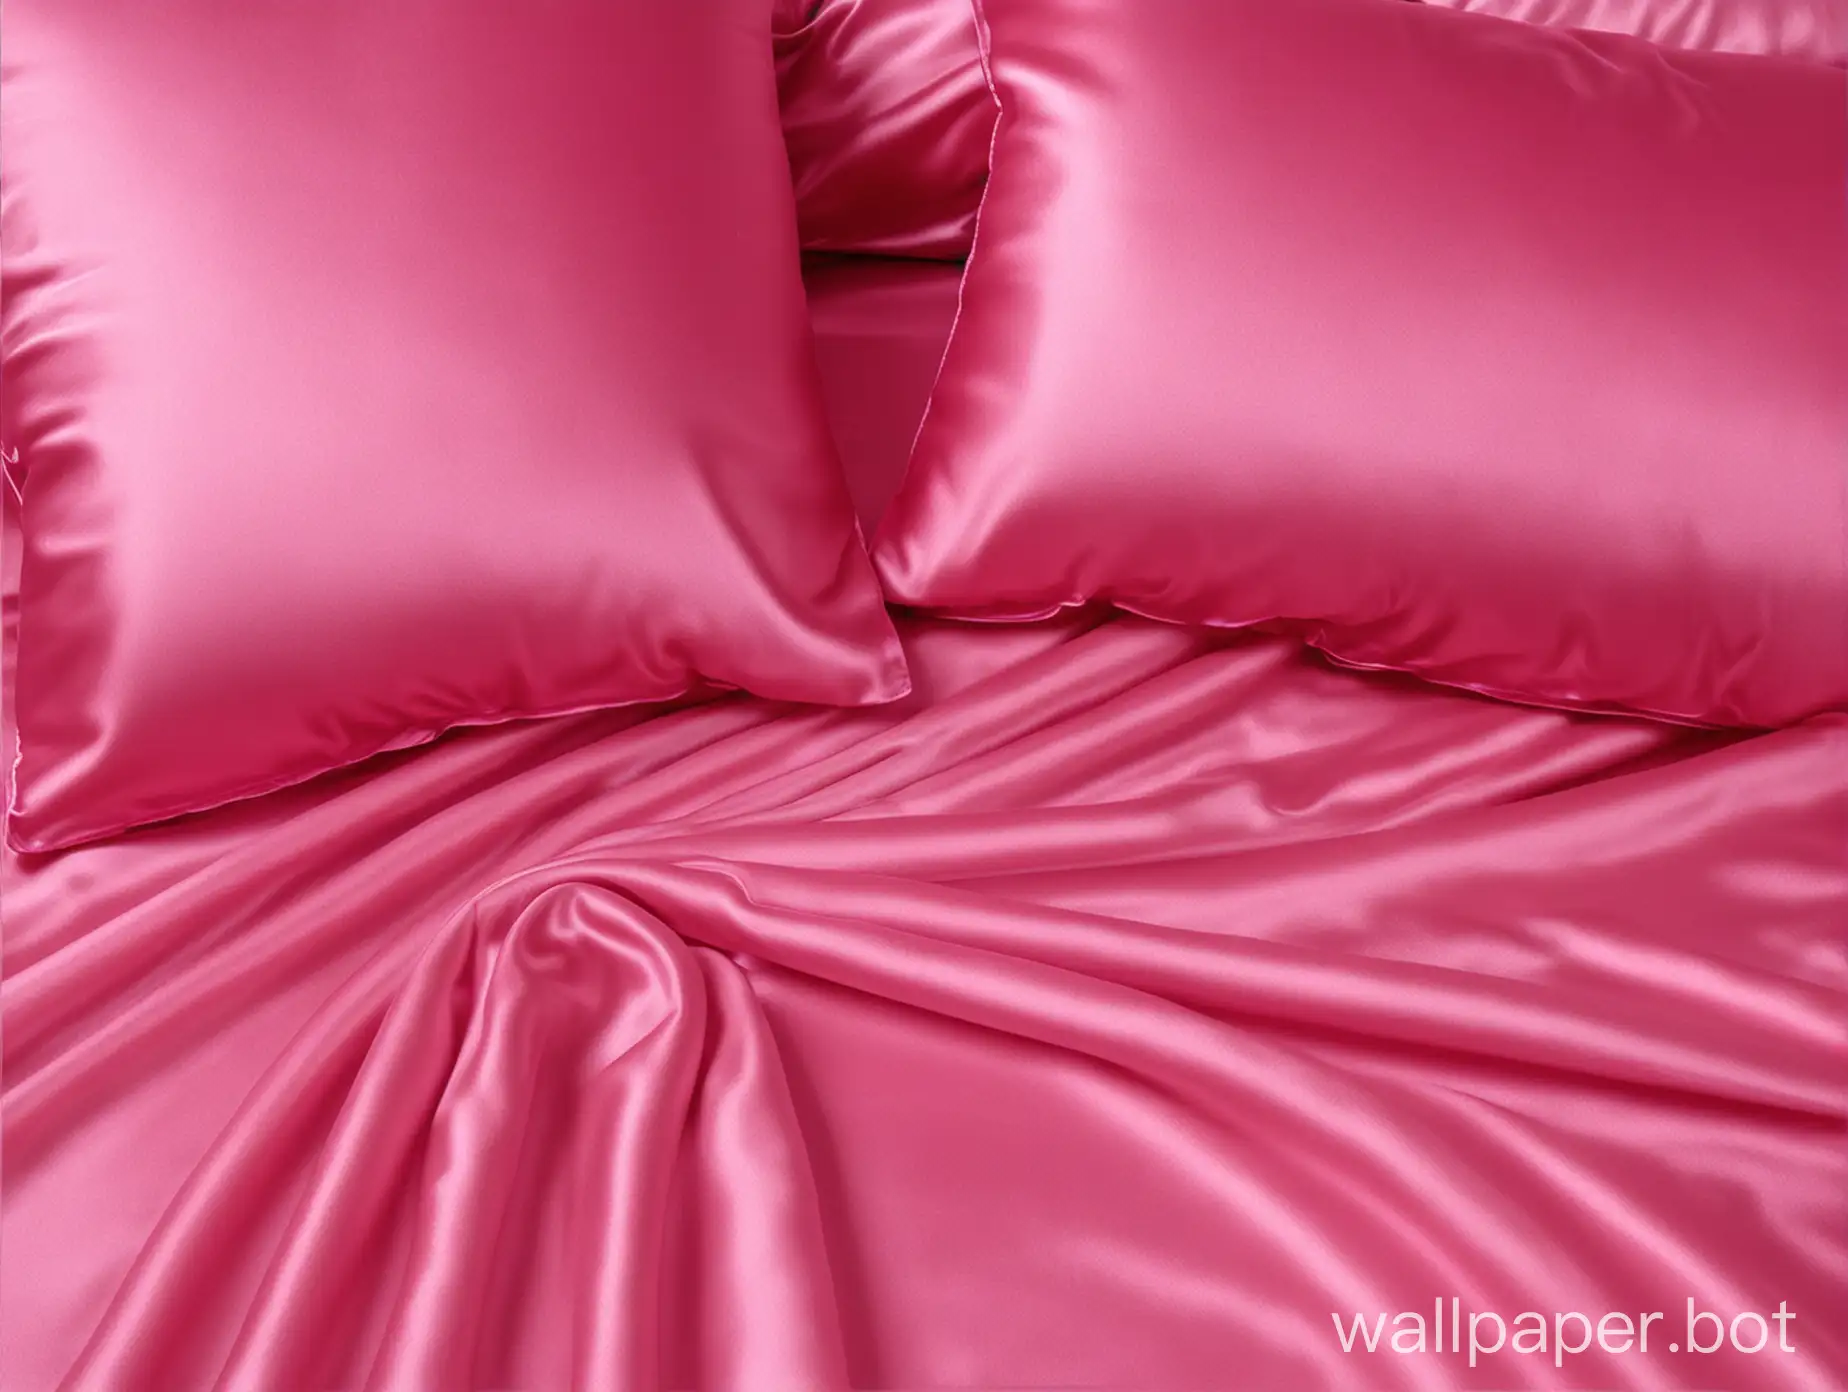 Luxurious-Mulberry-Silk-Bedding-in-Gentle-Pink-Fuchsia-Liquid-Hue